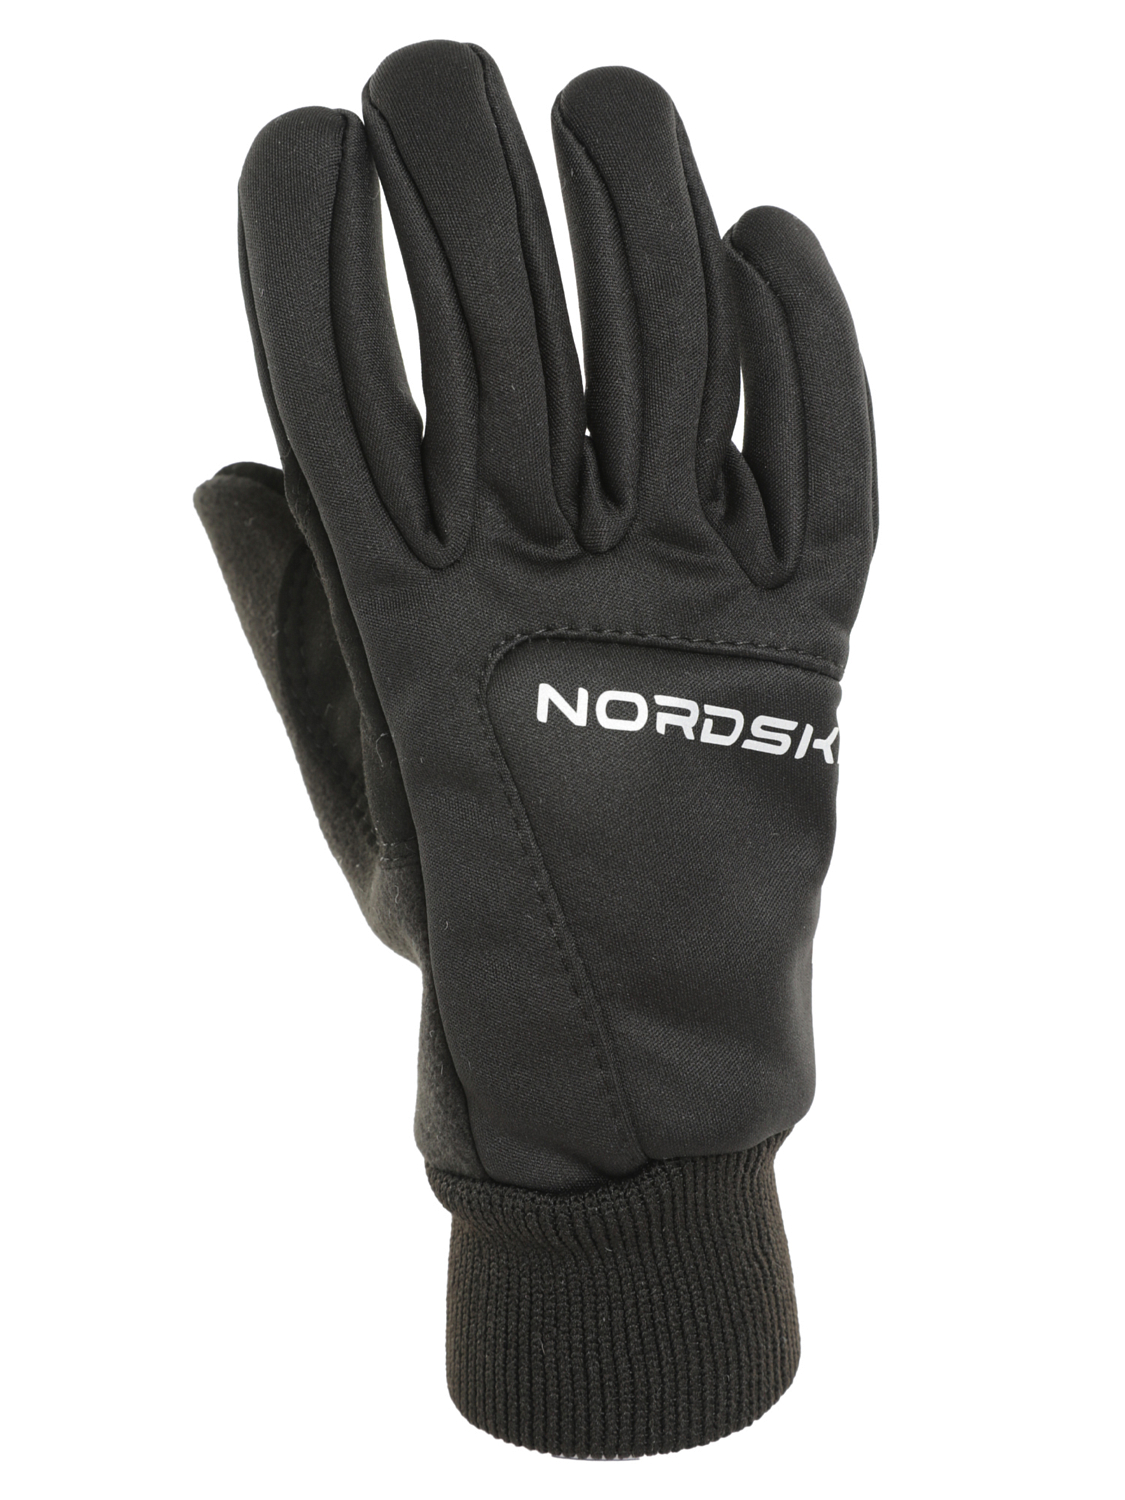 Перчатки Nordski Motion WS Black